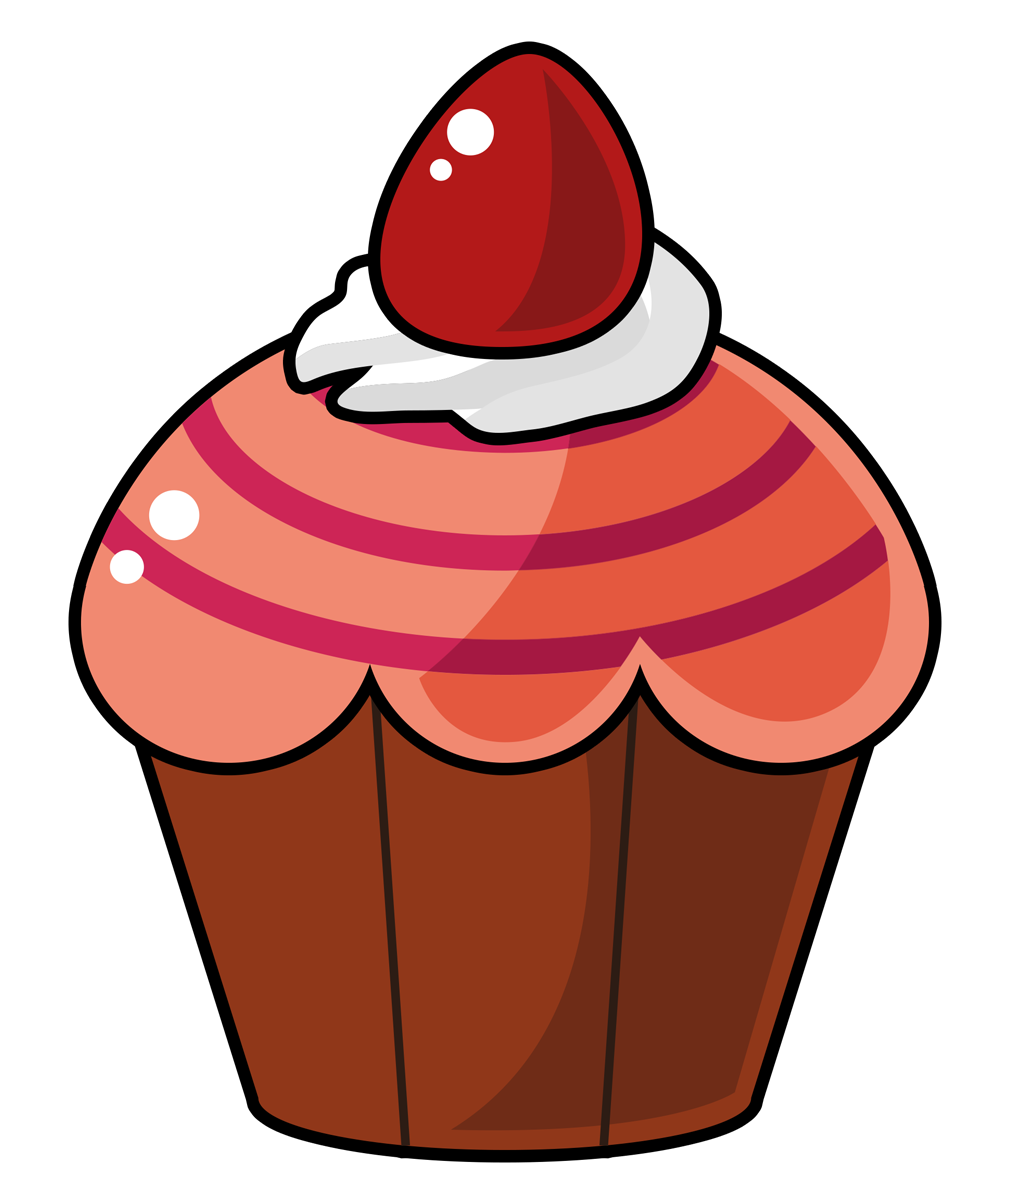 Cupcake Cartoon Image